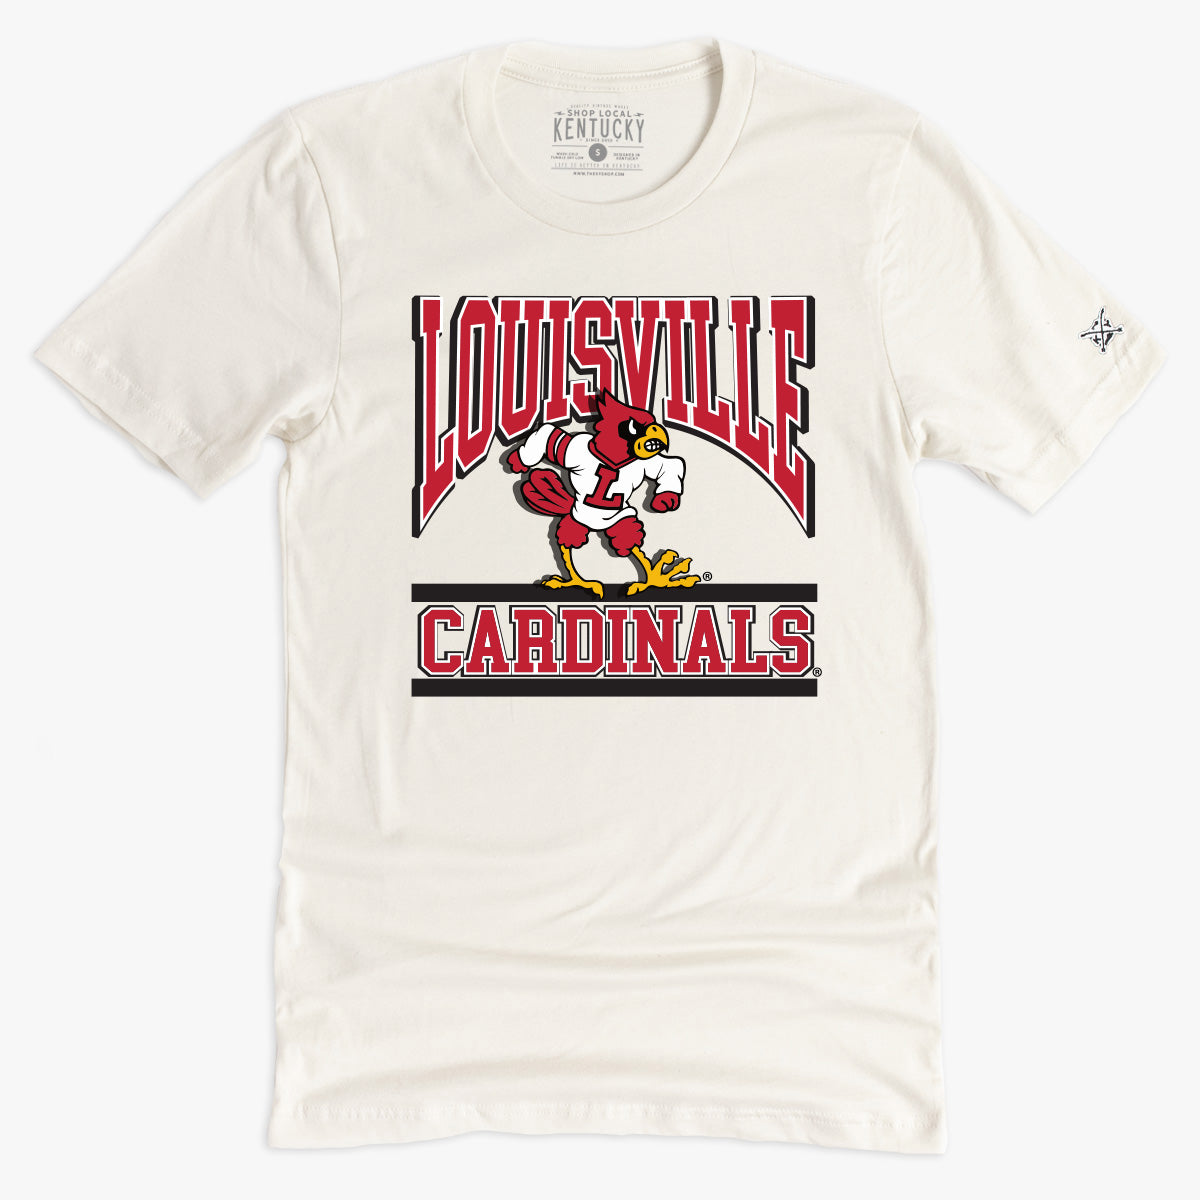 The Vintage Louisville Cardinals Big Block Tee